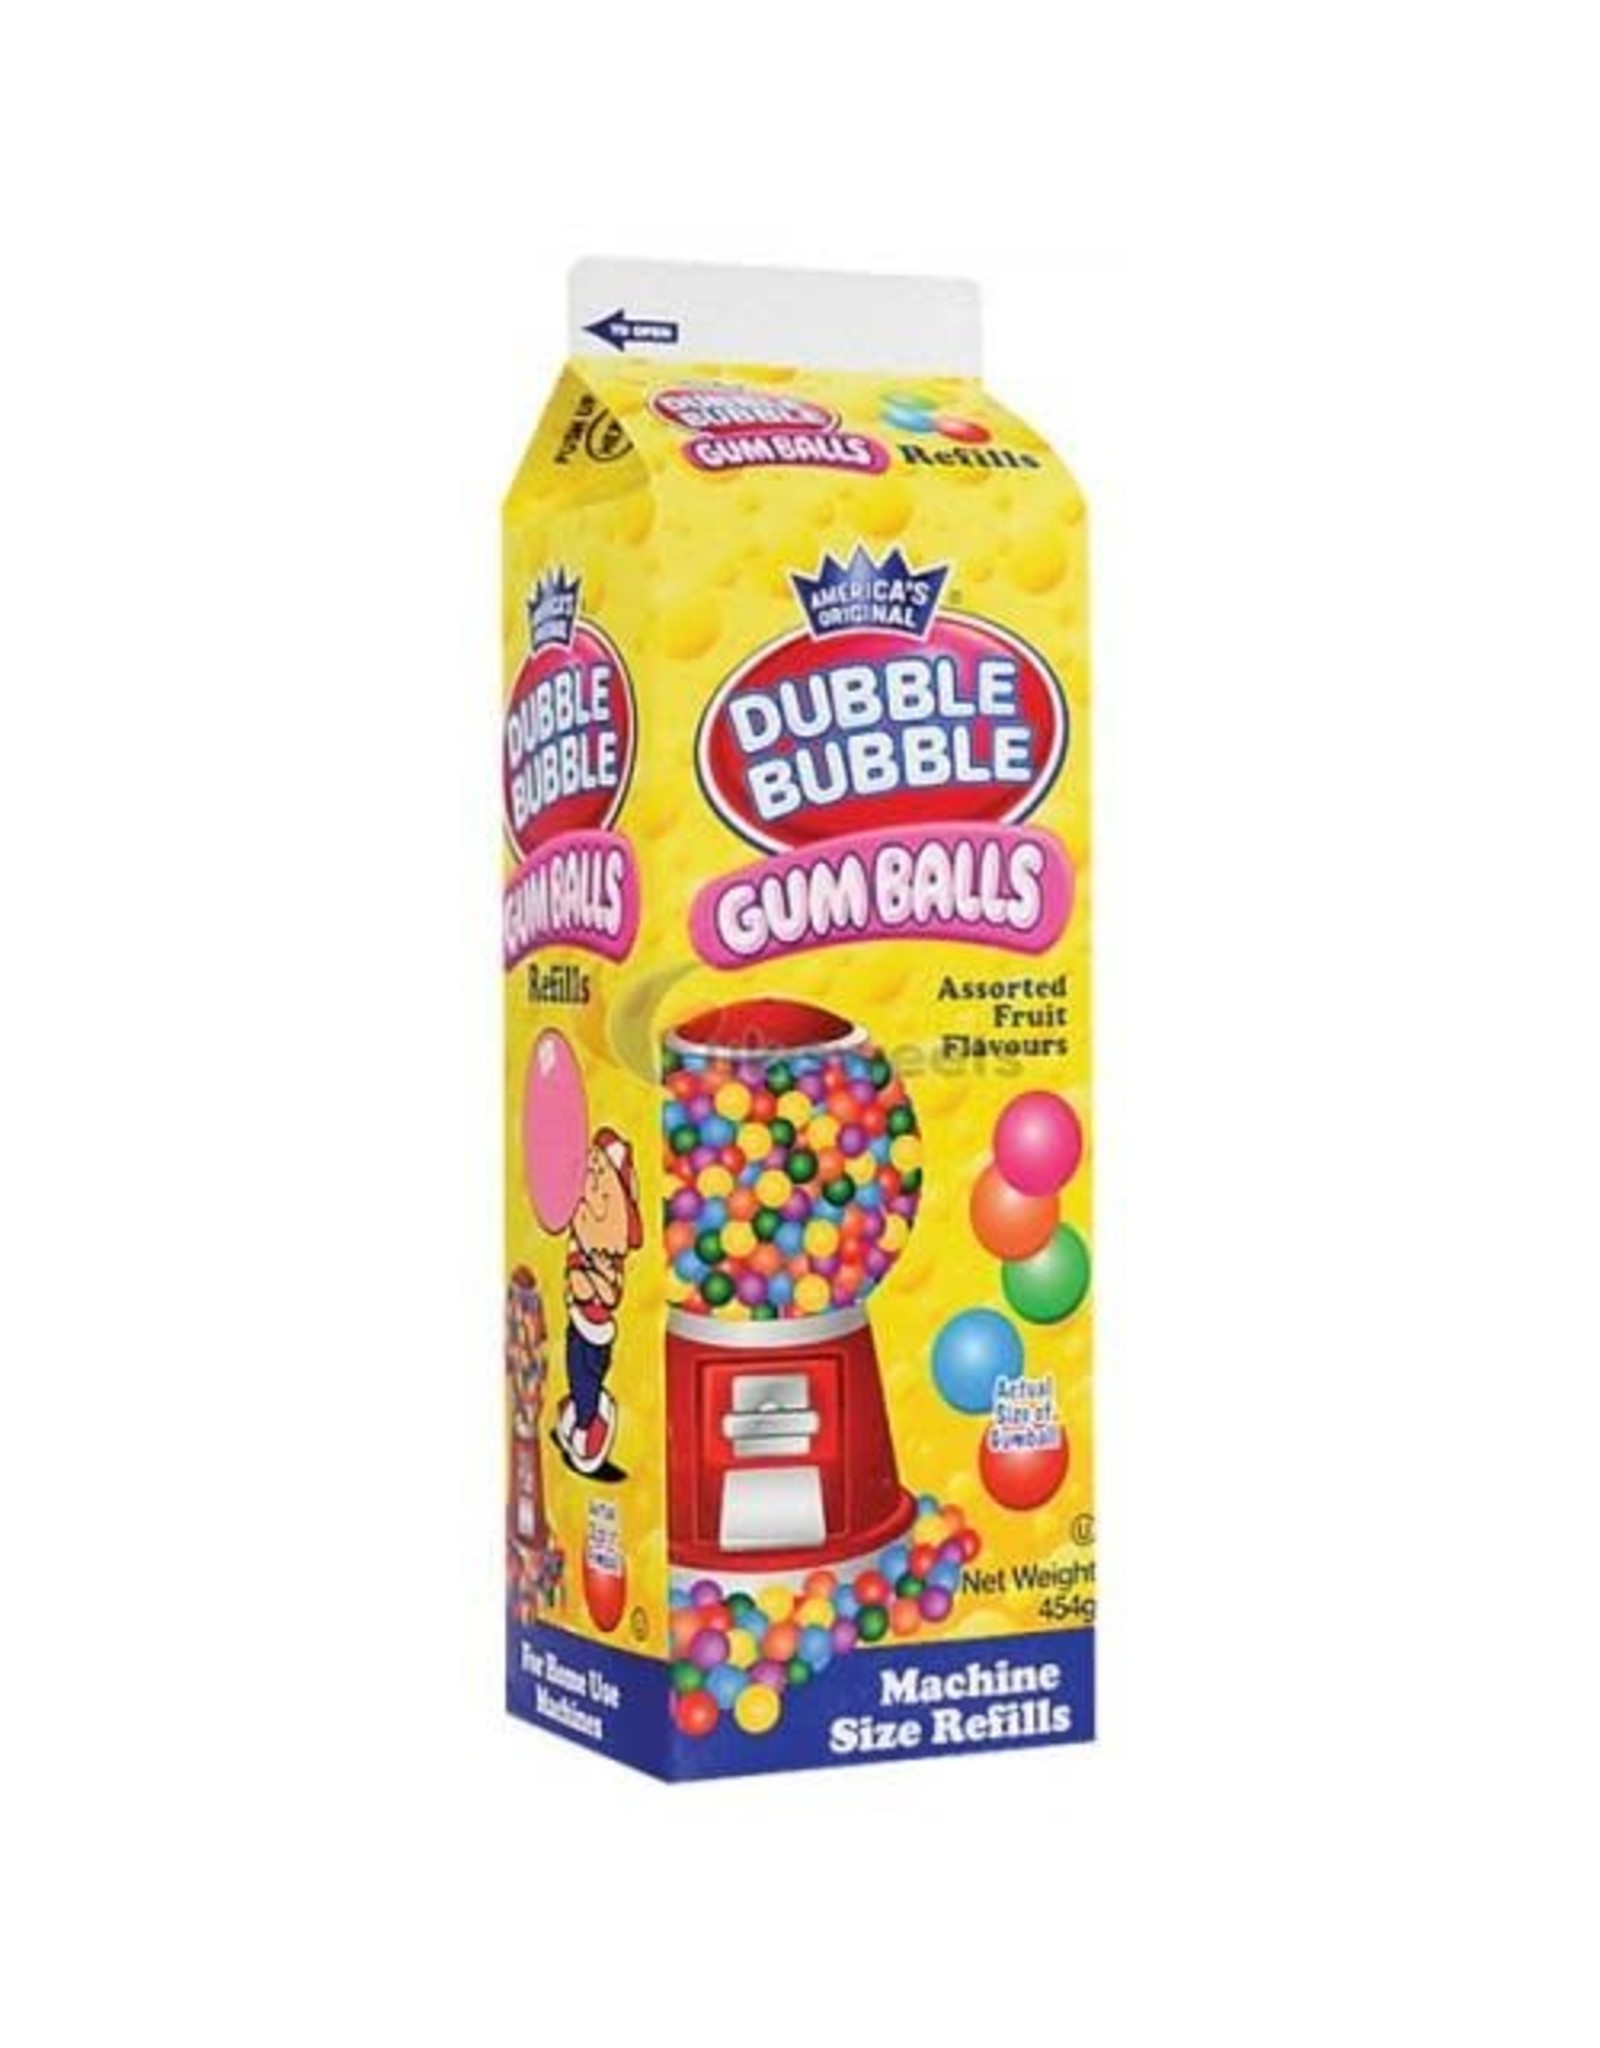 Dubble Bubble Gumball machine size refills